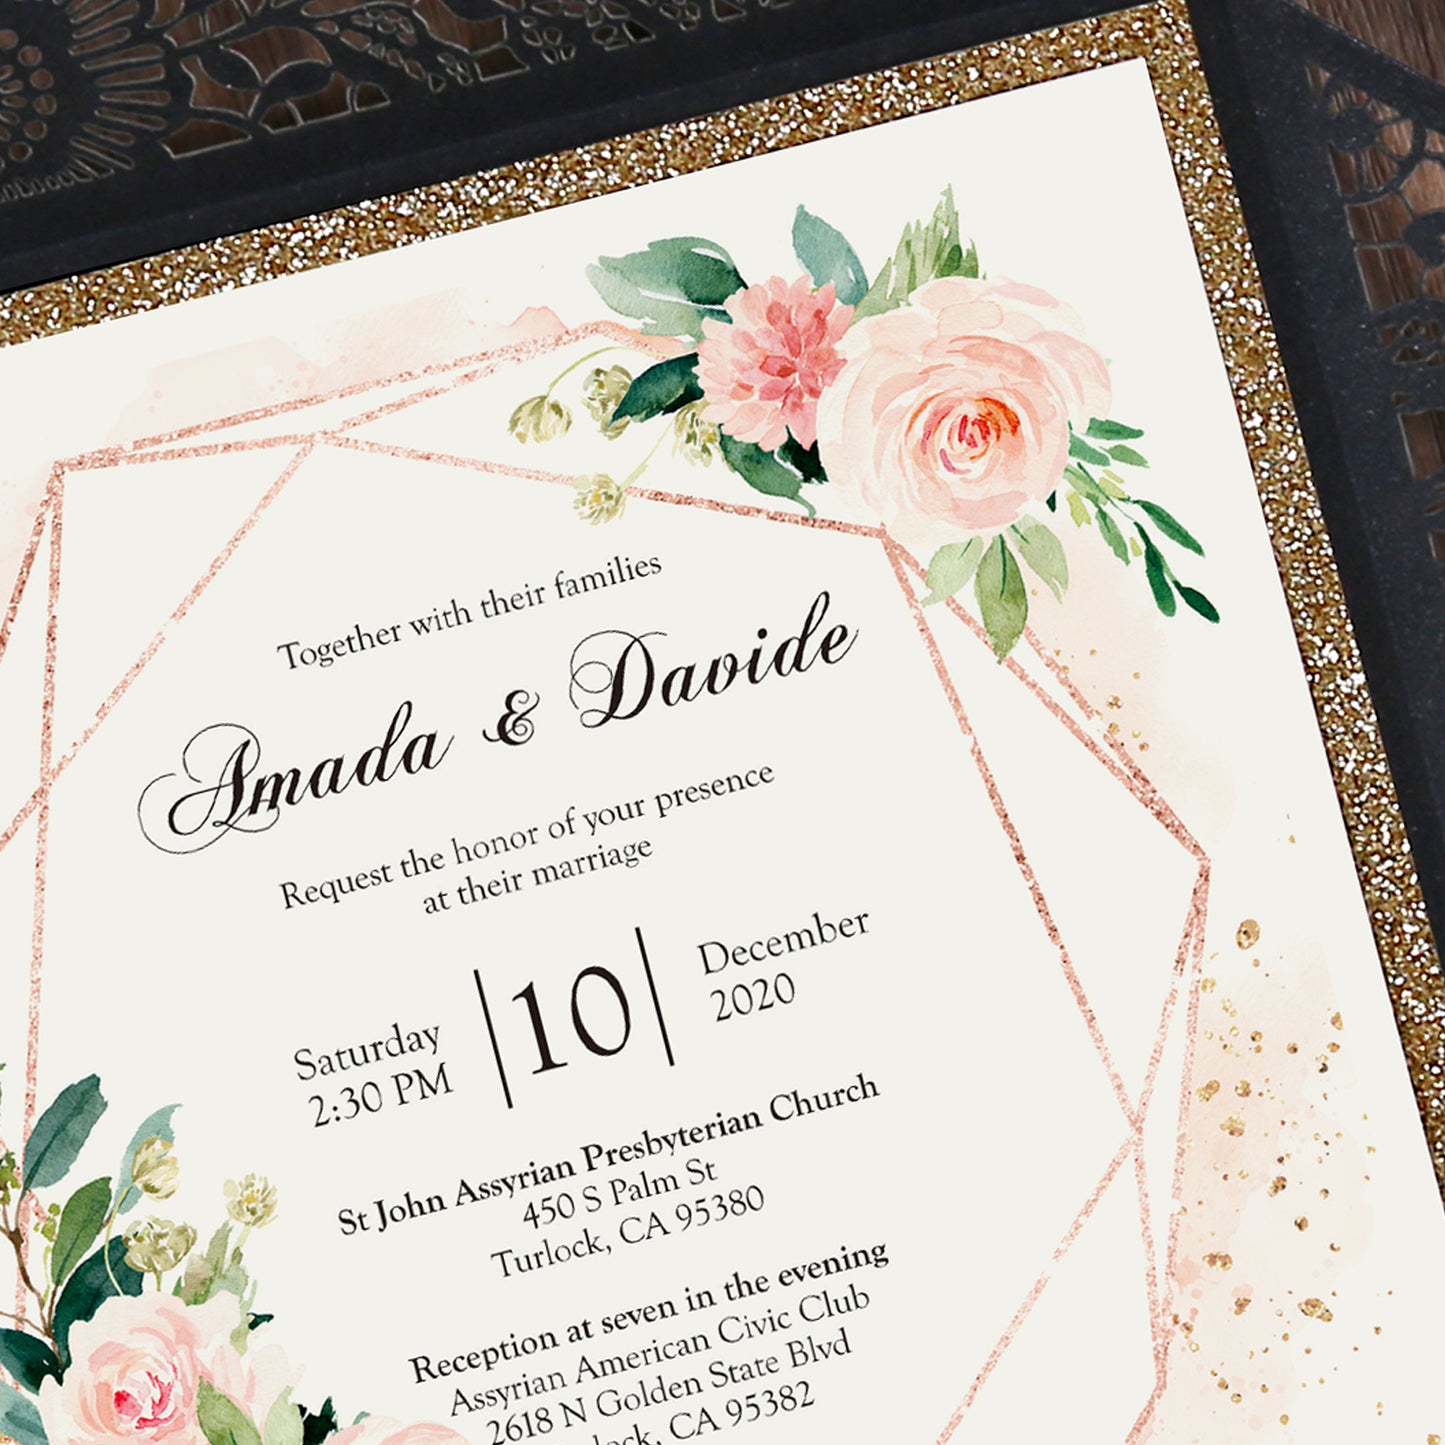 Square Black Lase-cut Lace Flower Pattern Wedding Invitations